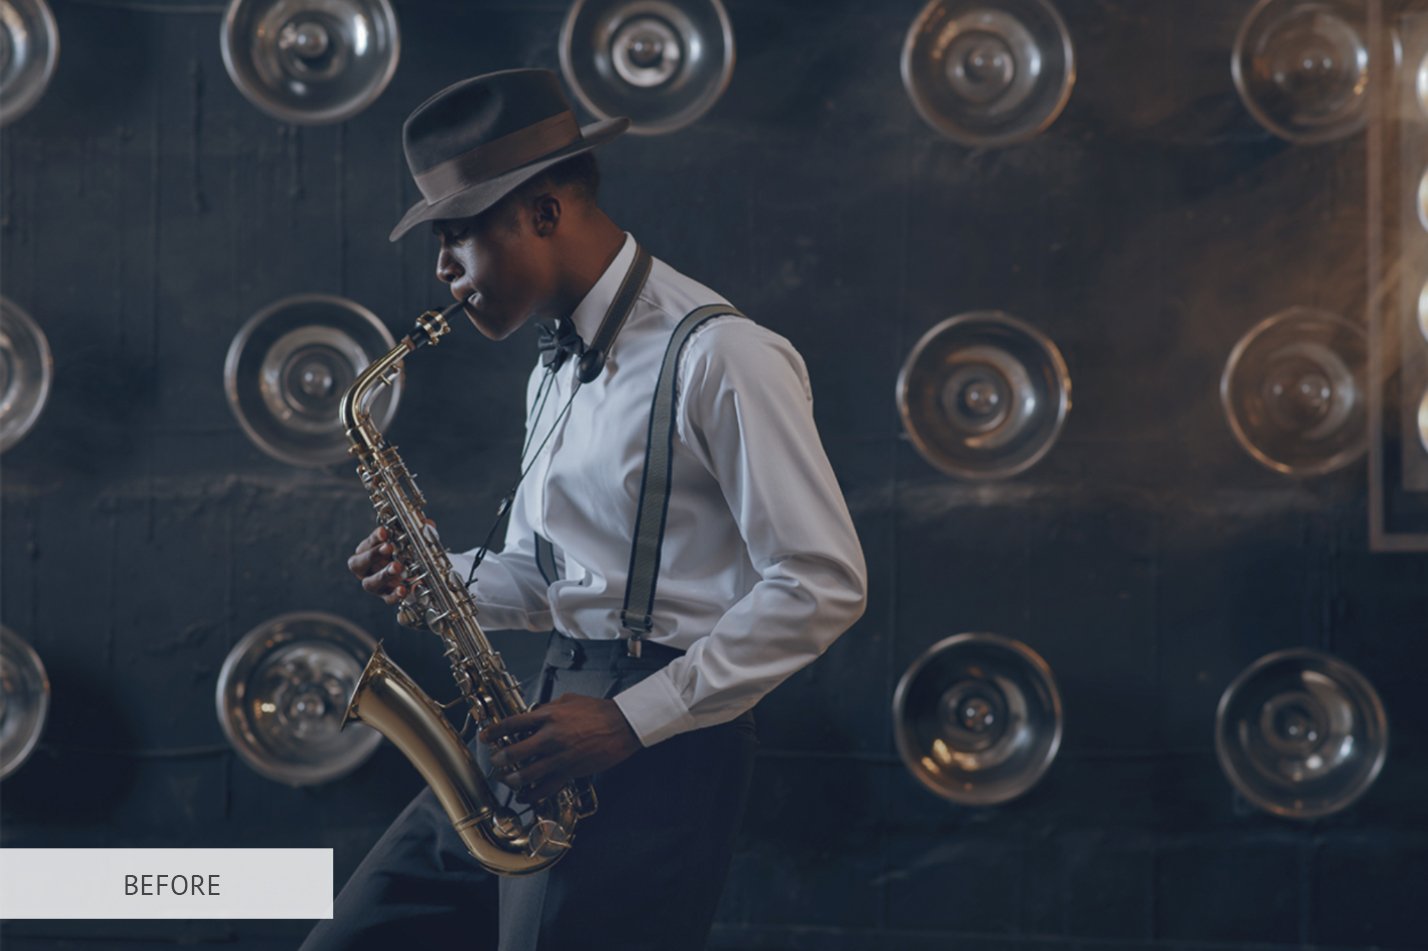 black jazzman in hat plays the saxophone on stage lnhtgd5 147